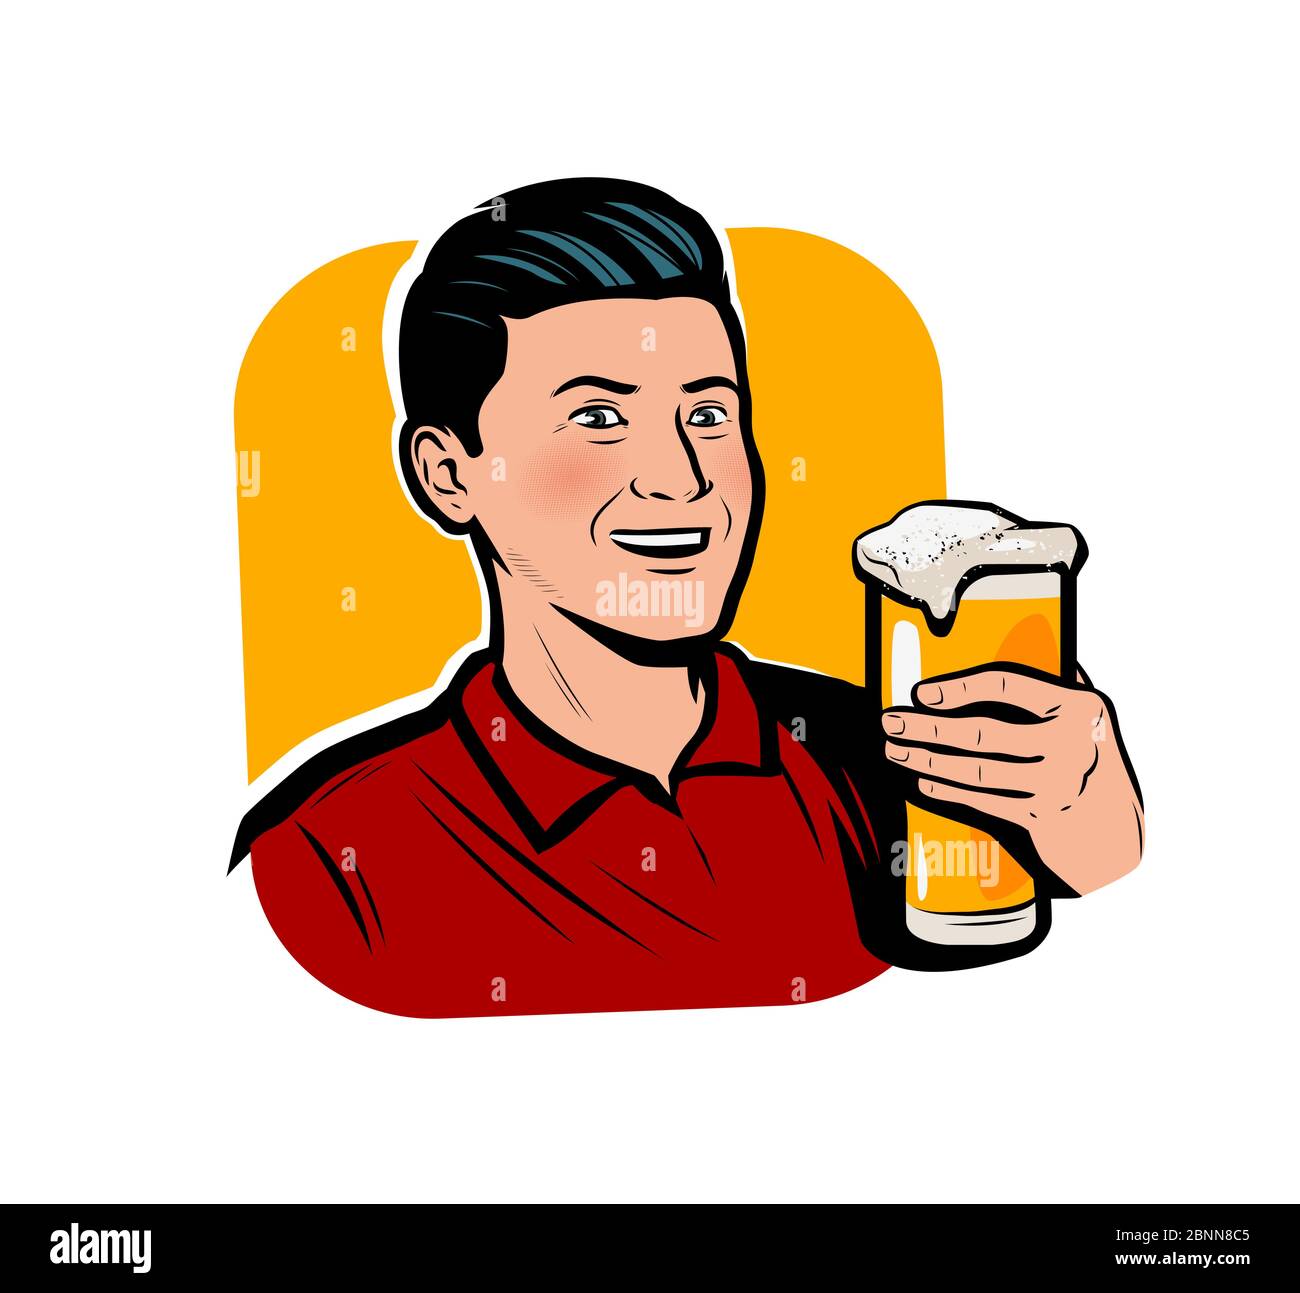 Mann mit Bierkrug. Retro Comic Pop Art Vektor-Illustration Stock Vektor